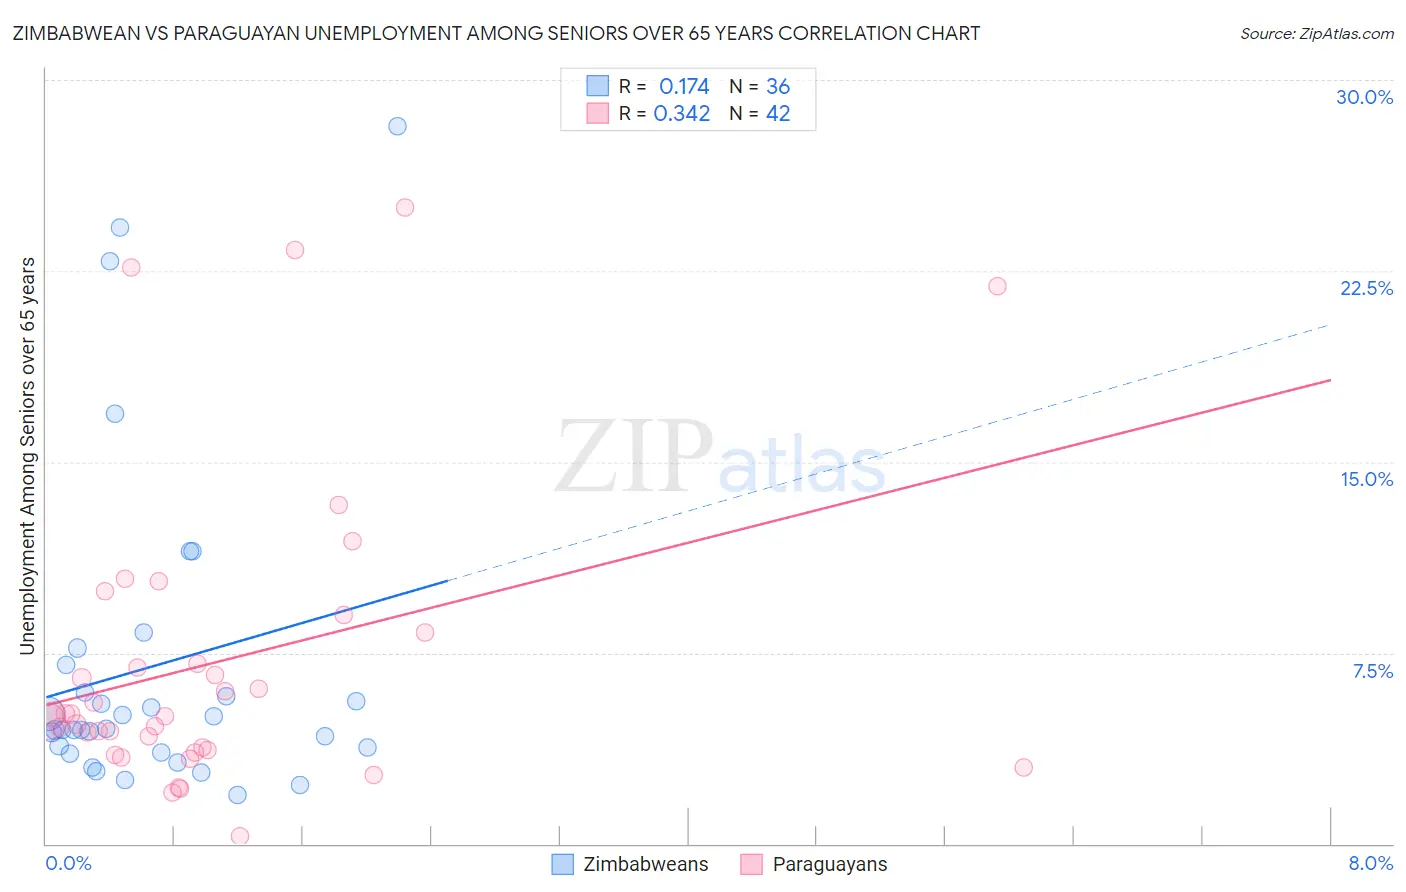 Zimbabwean vs Paraguayan Unemployment Among Seniors over 65 years